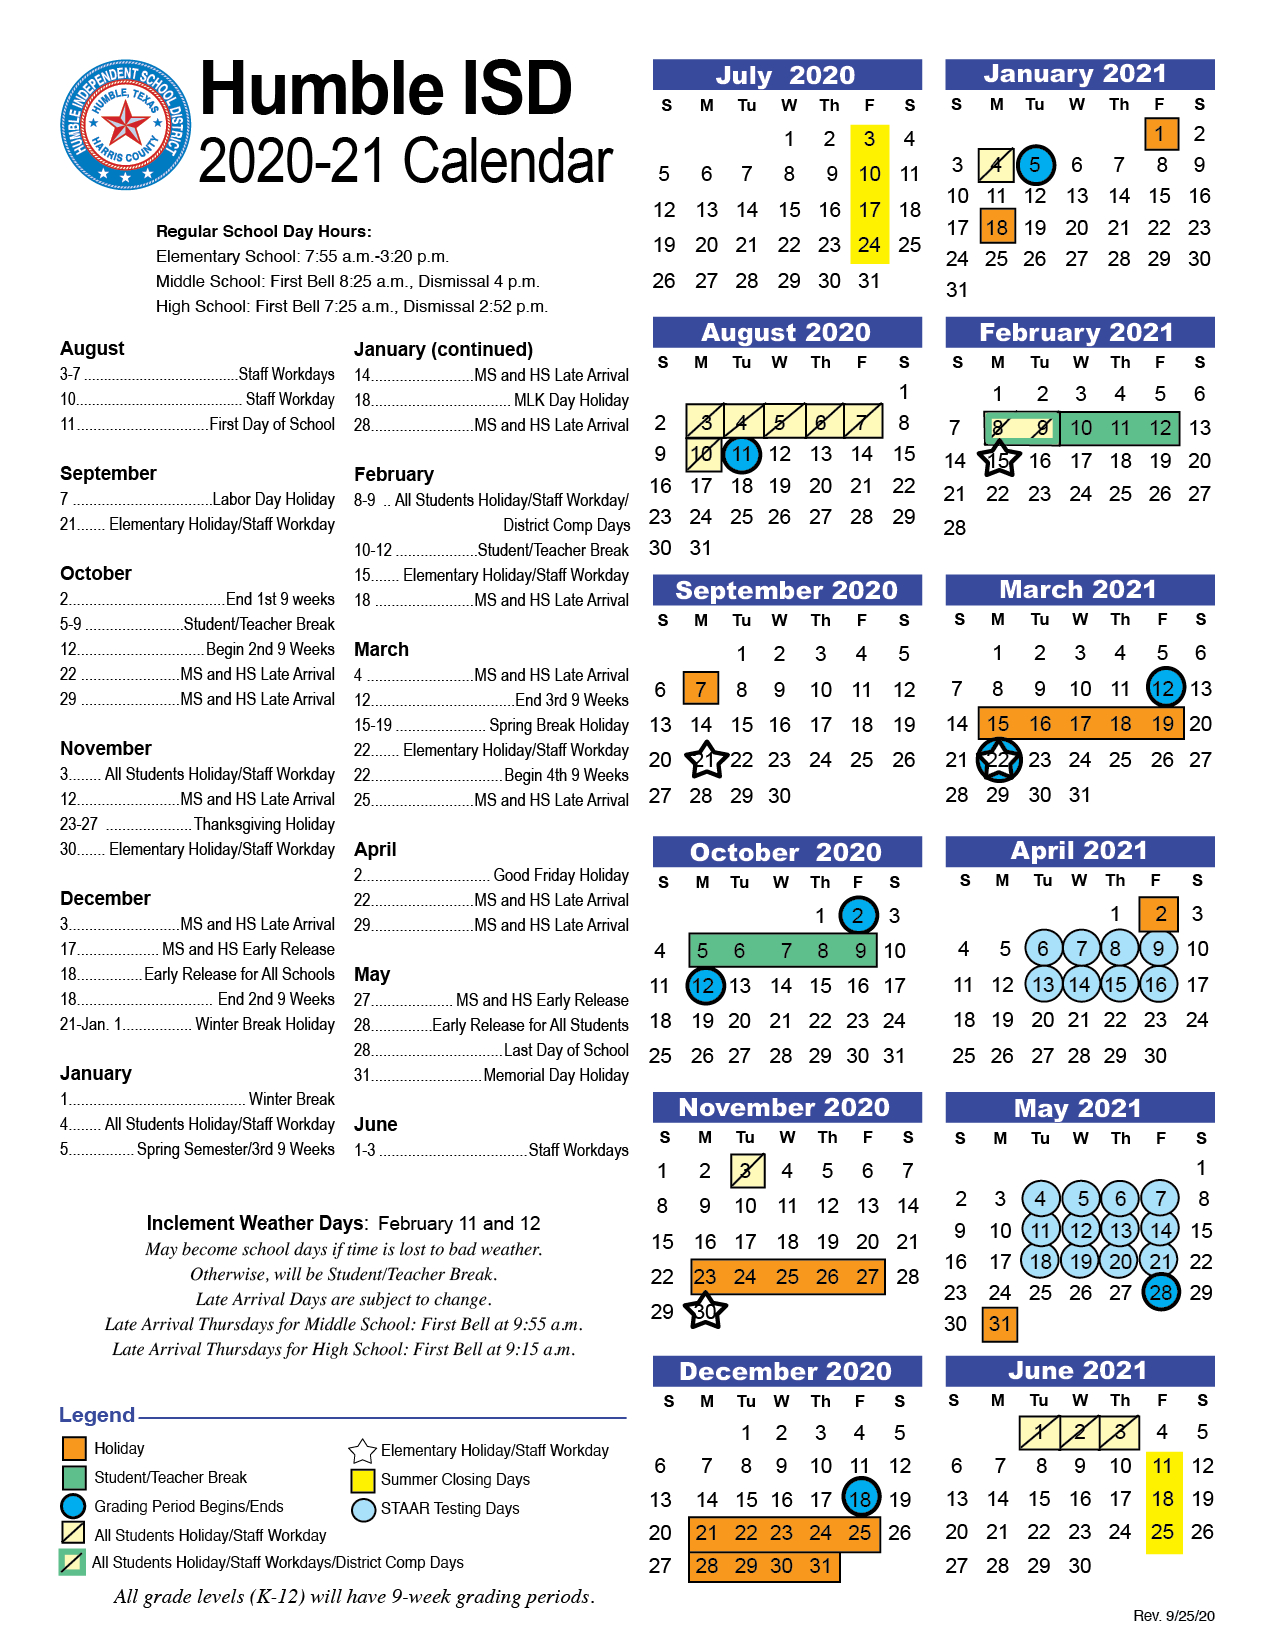 Calendars / Dates / District Calendars/Dates